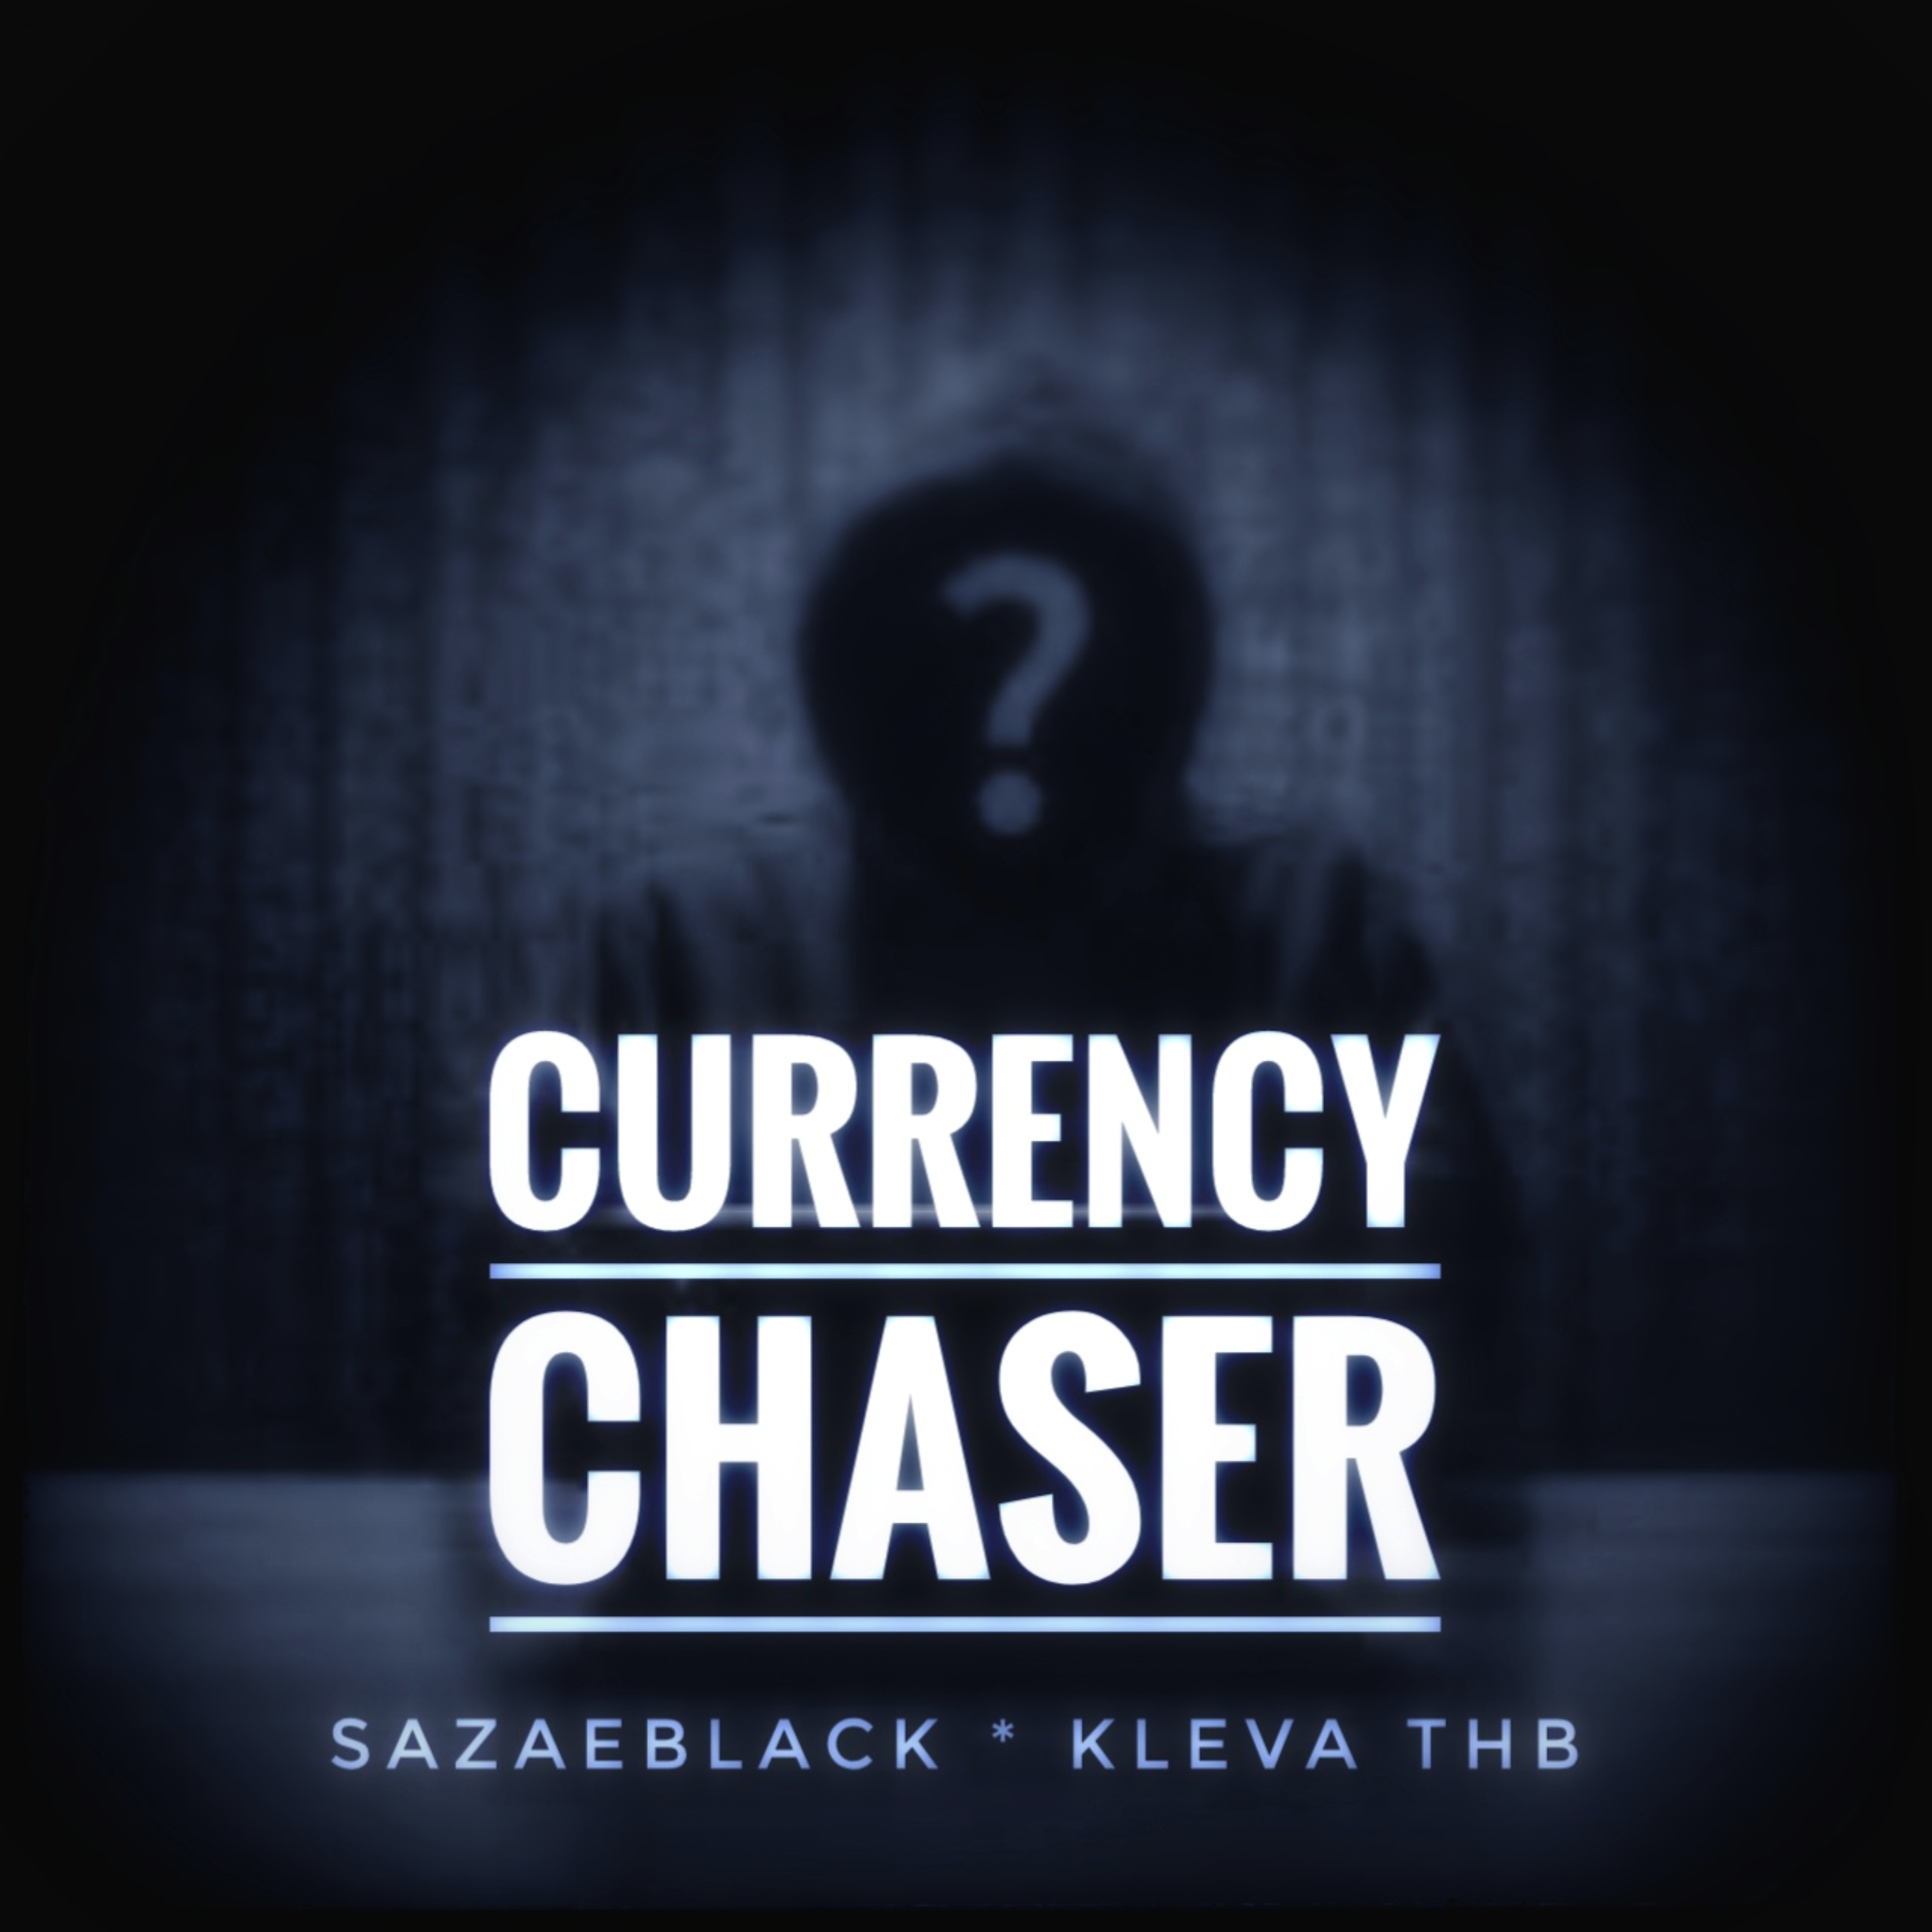 CURRENCY CHASER FT. KLEVA THB - Sazaeblack